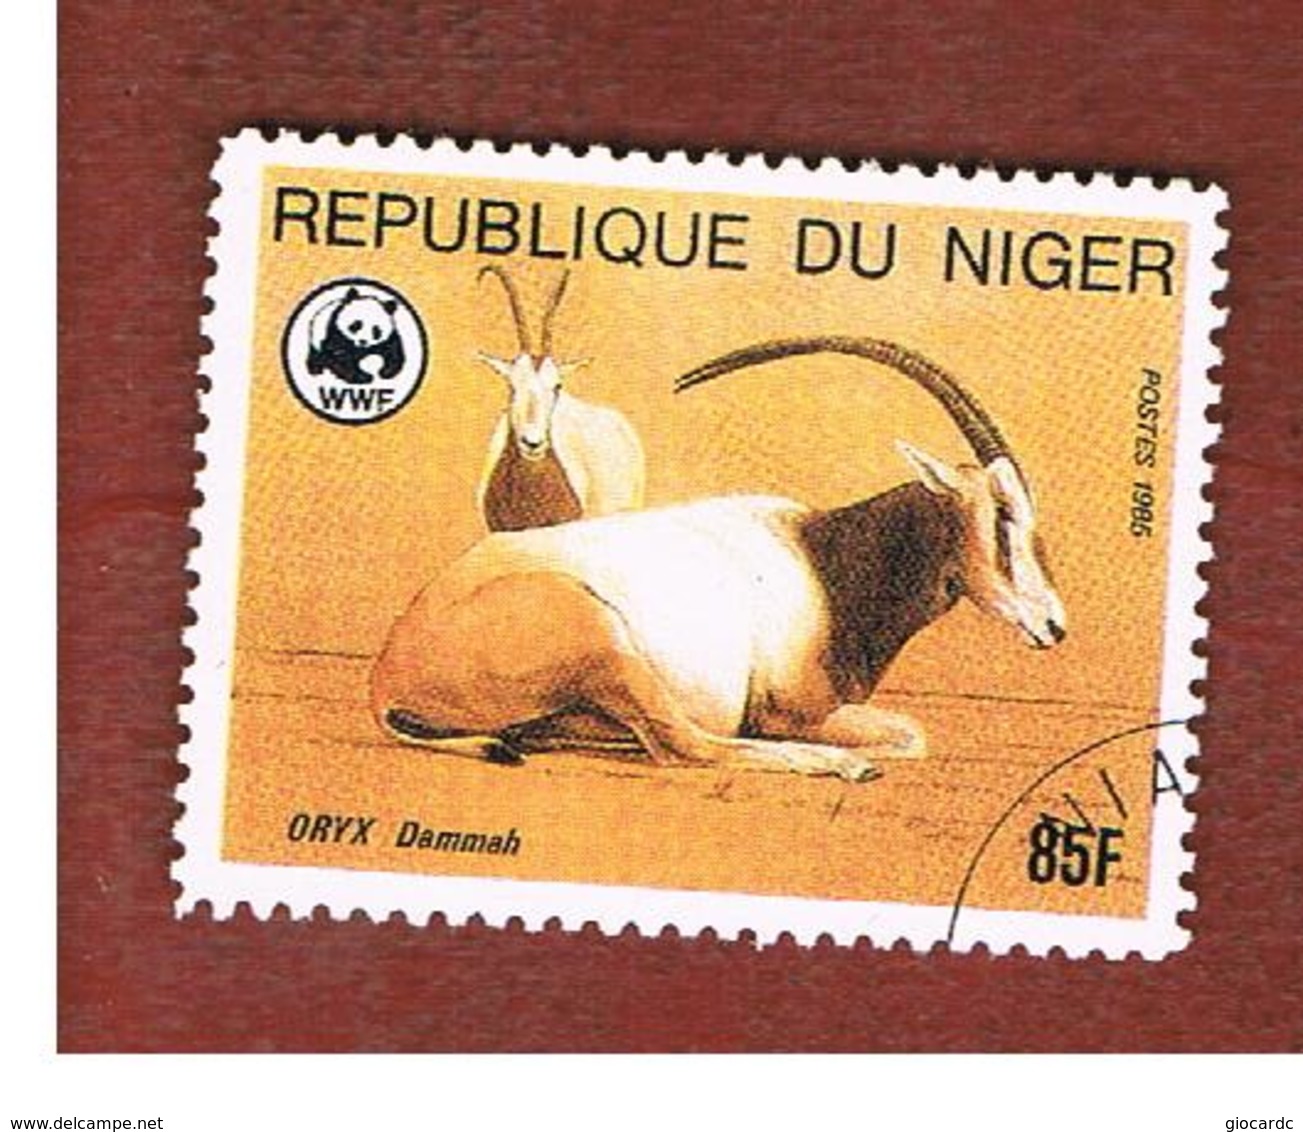 NIGER  -  SG 1040  -  1985 WWF: ENDANGERED ANIMALS (ORYX DAMMAH)  -  USED * - Niger (1960-...)